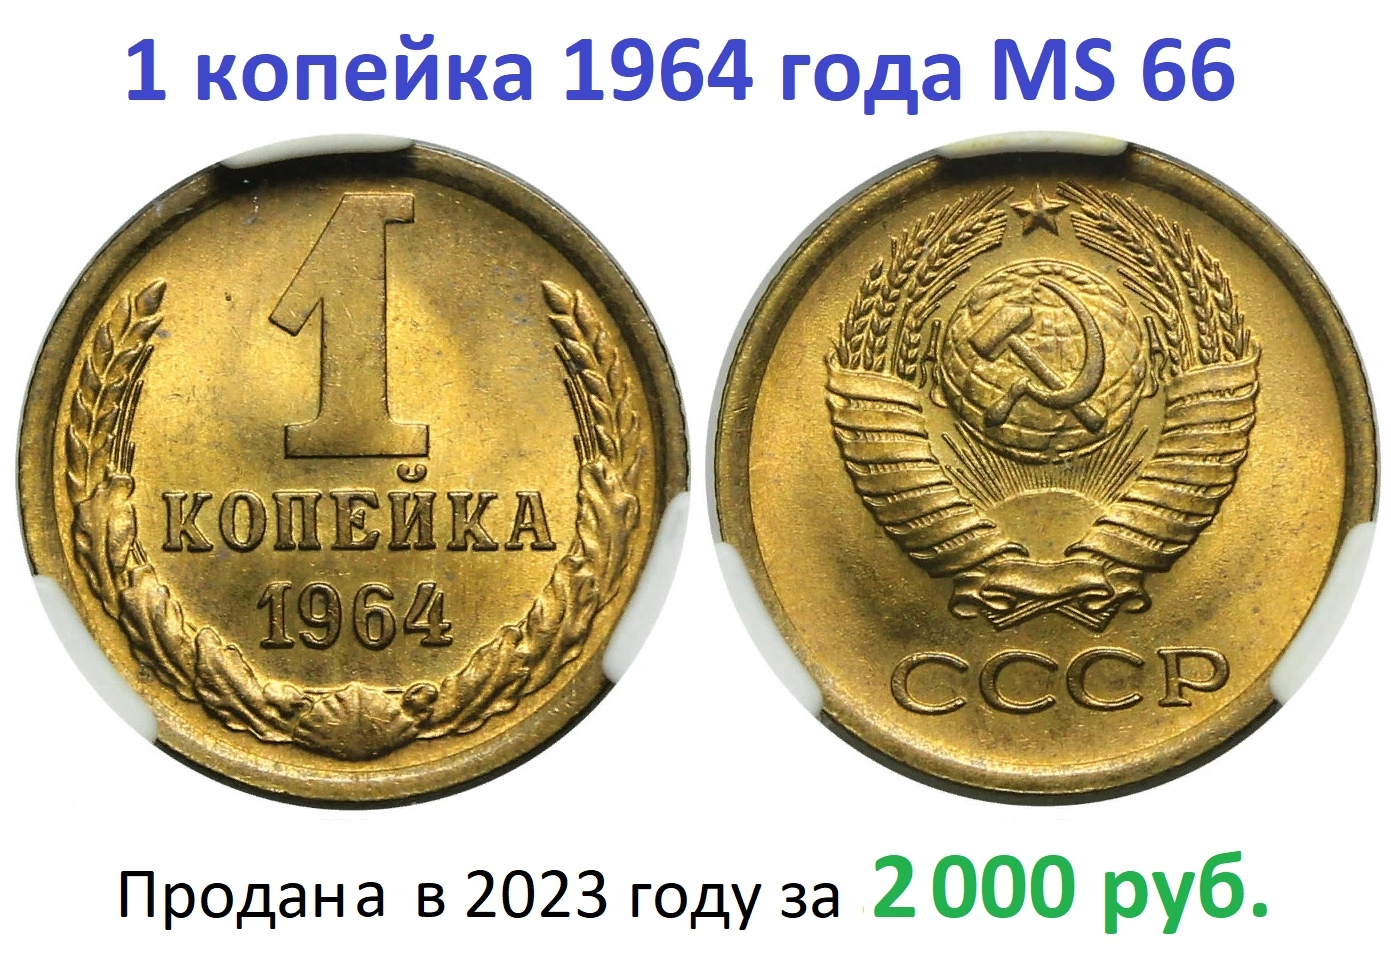 На столе лежит 3 монеты в сумме 3 рубля